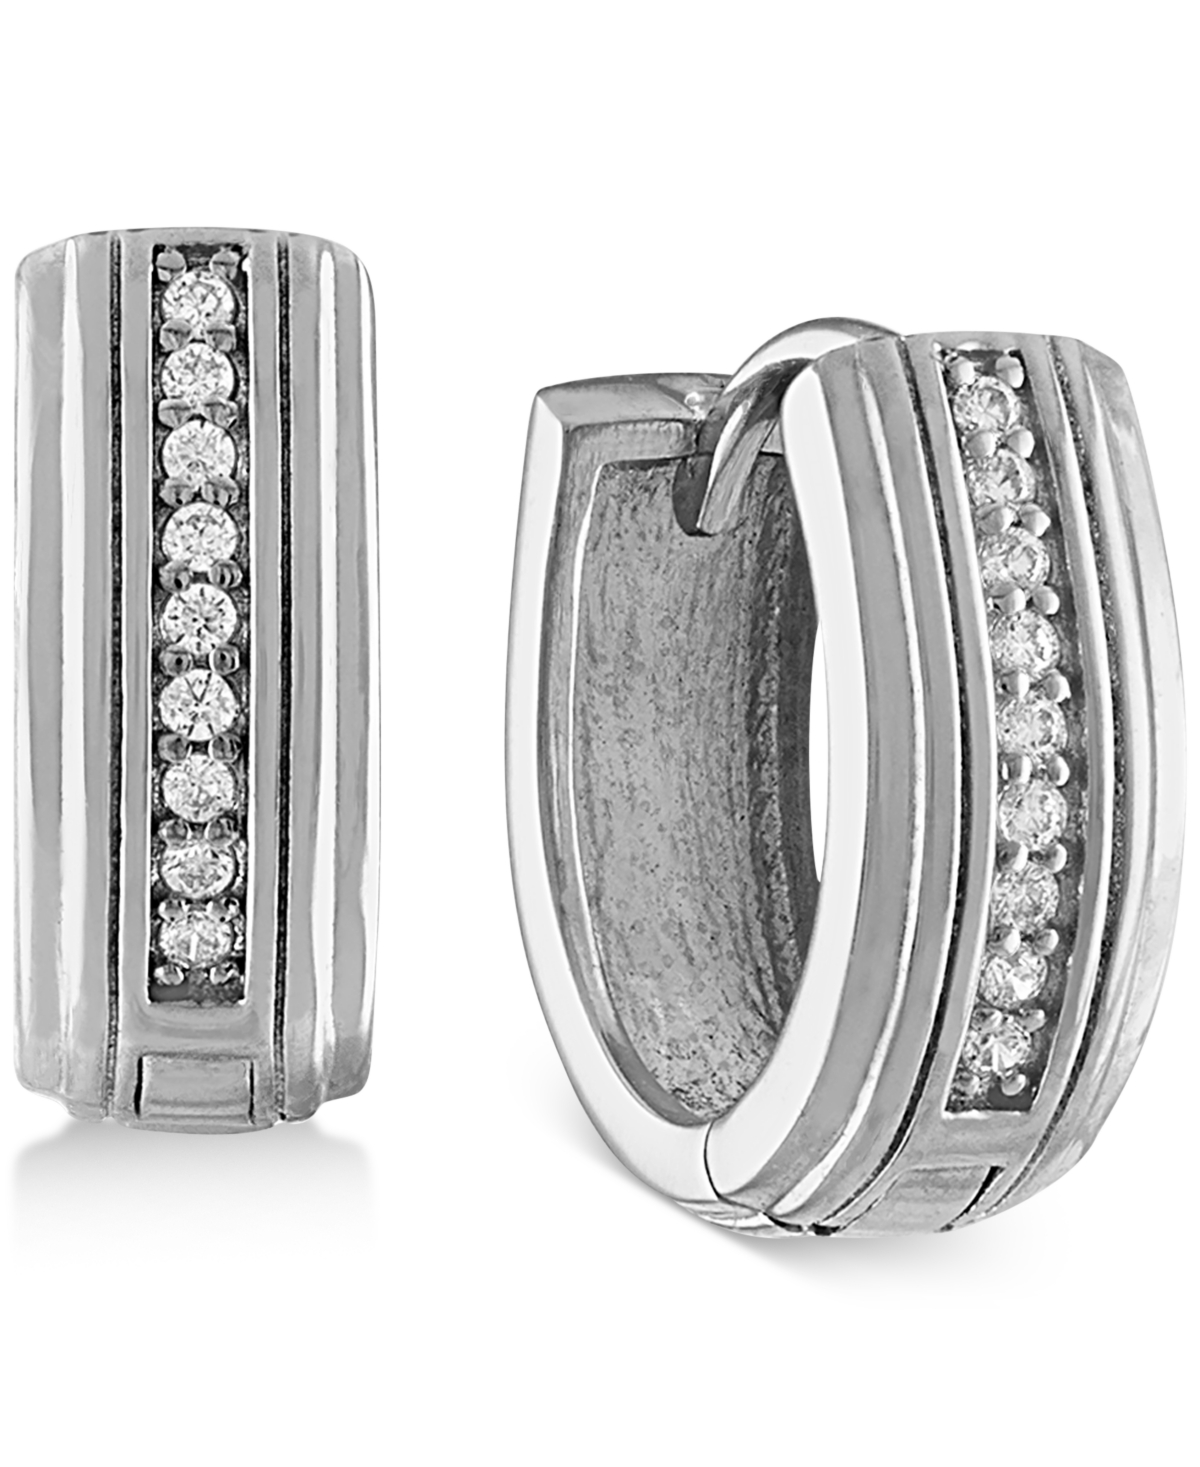 Diamond Hoop Earrings (1/10 ct. t.w.) in Sterling Silver, Created for Macy's - Sterling Silver